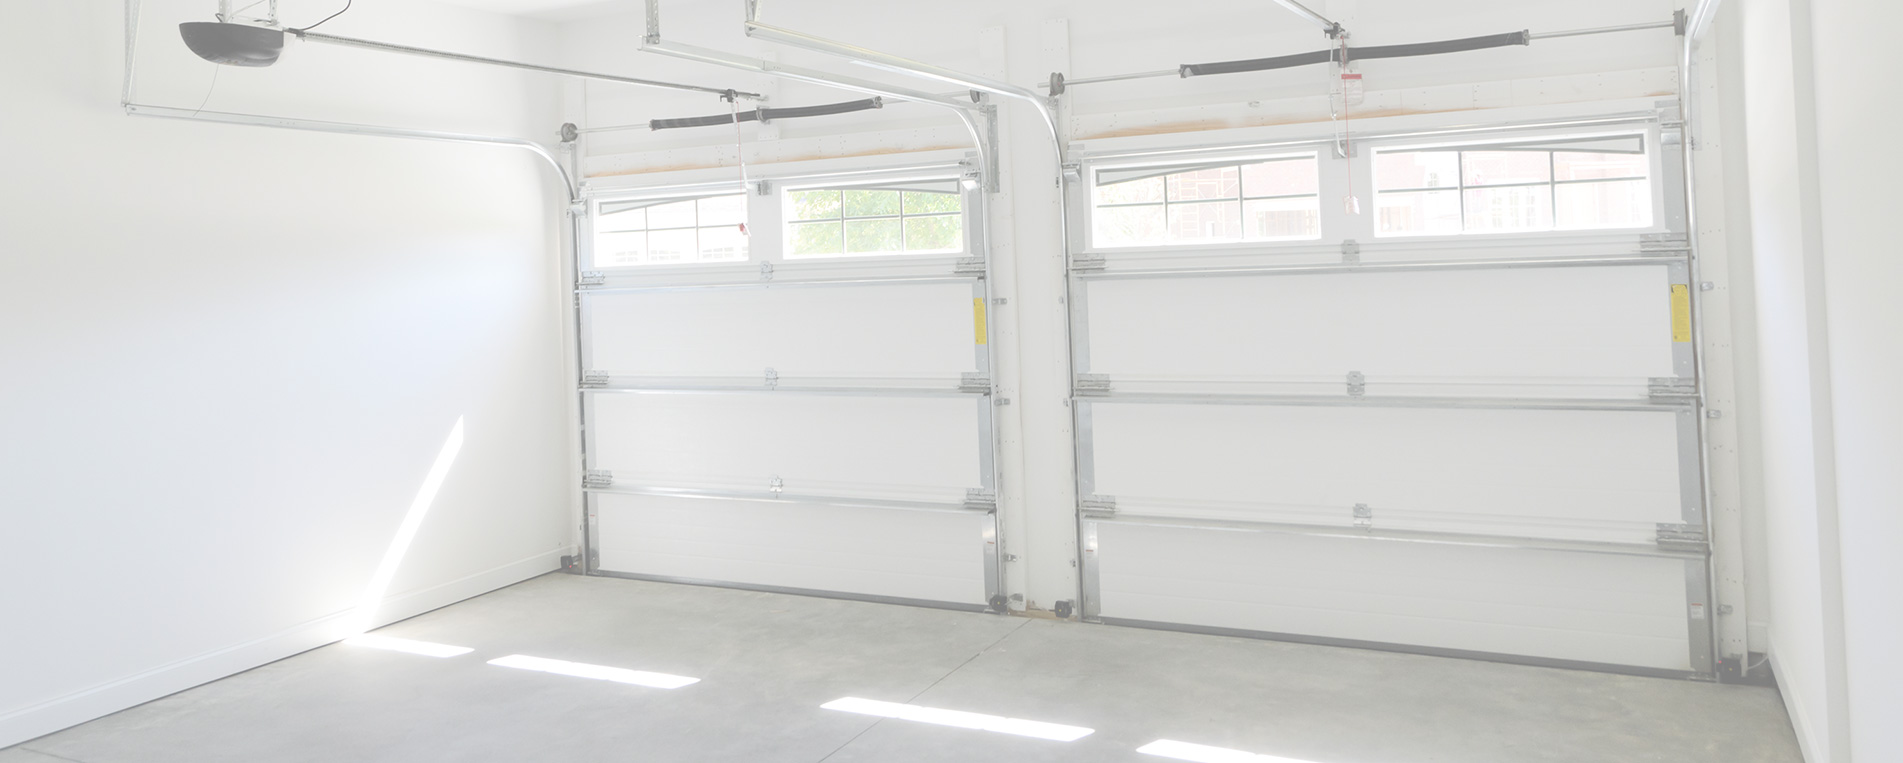 Popular Questions About Garage Doors